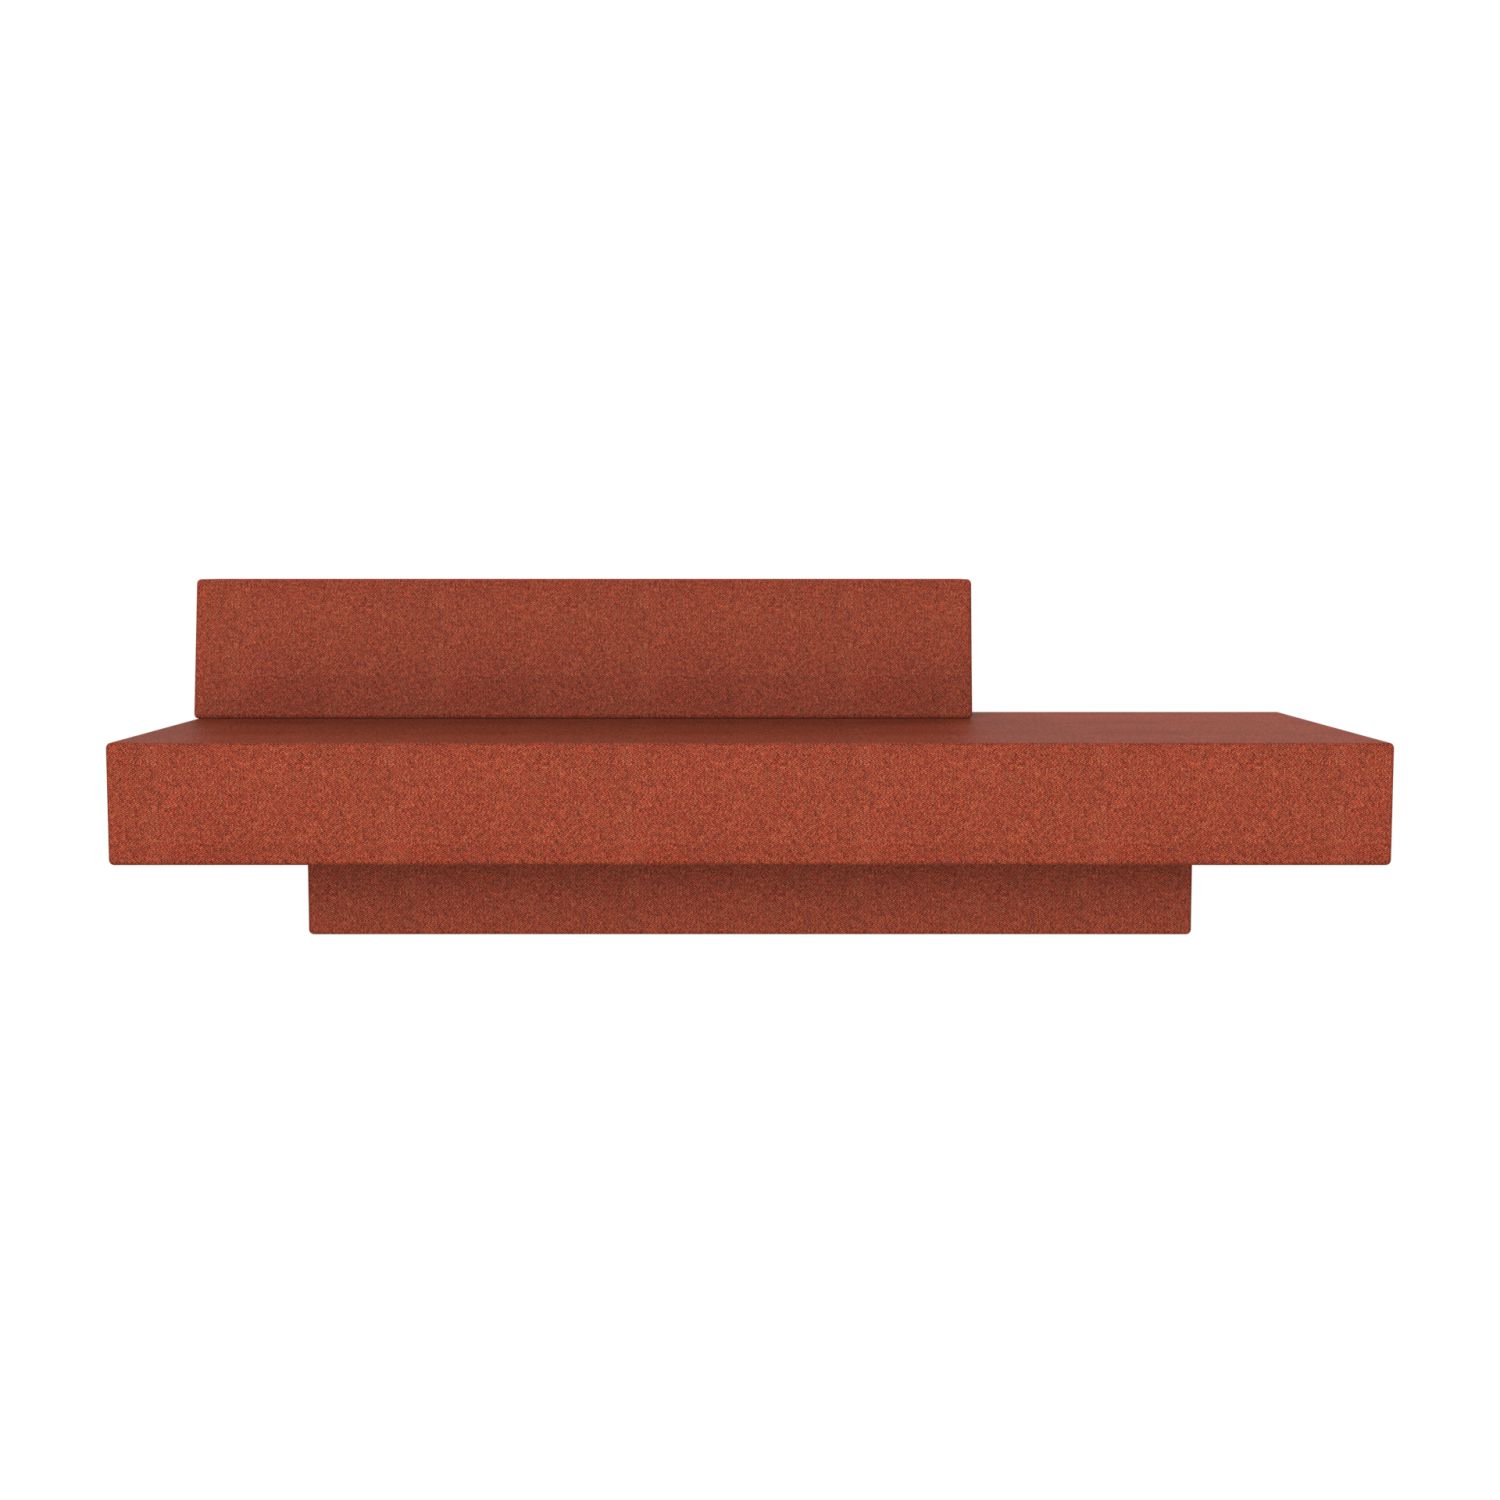 lensvelt atelier van lieshout glyder sofa with sliding backrest 85 x 240 cm moss clay brown 65 price level 2